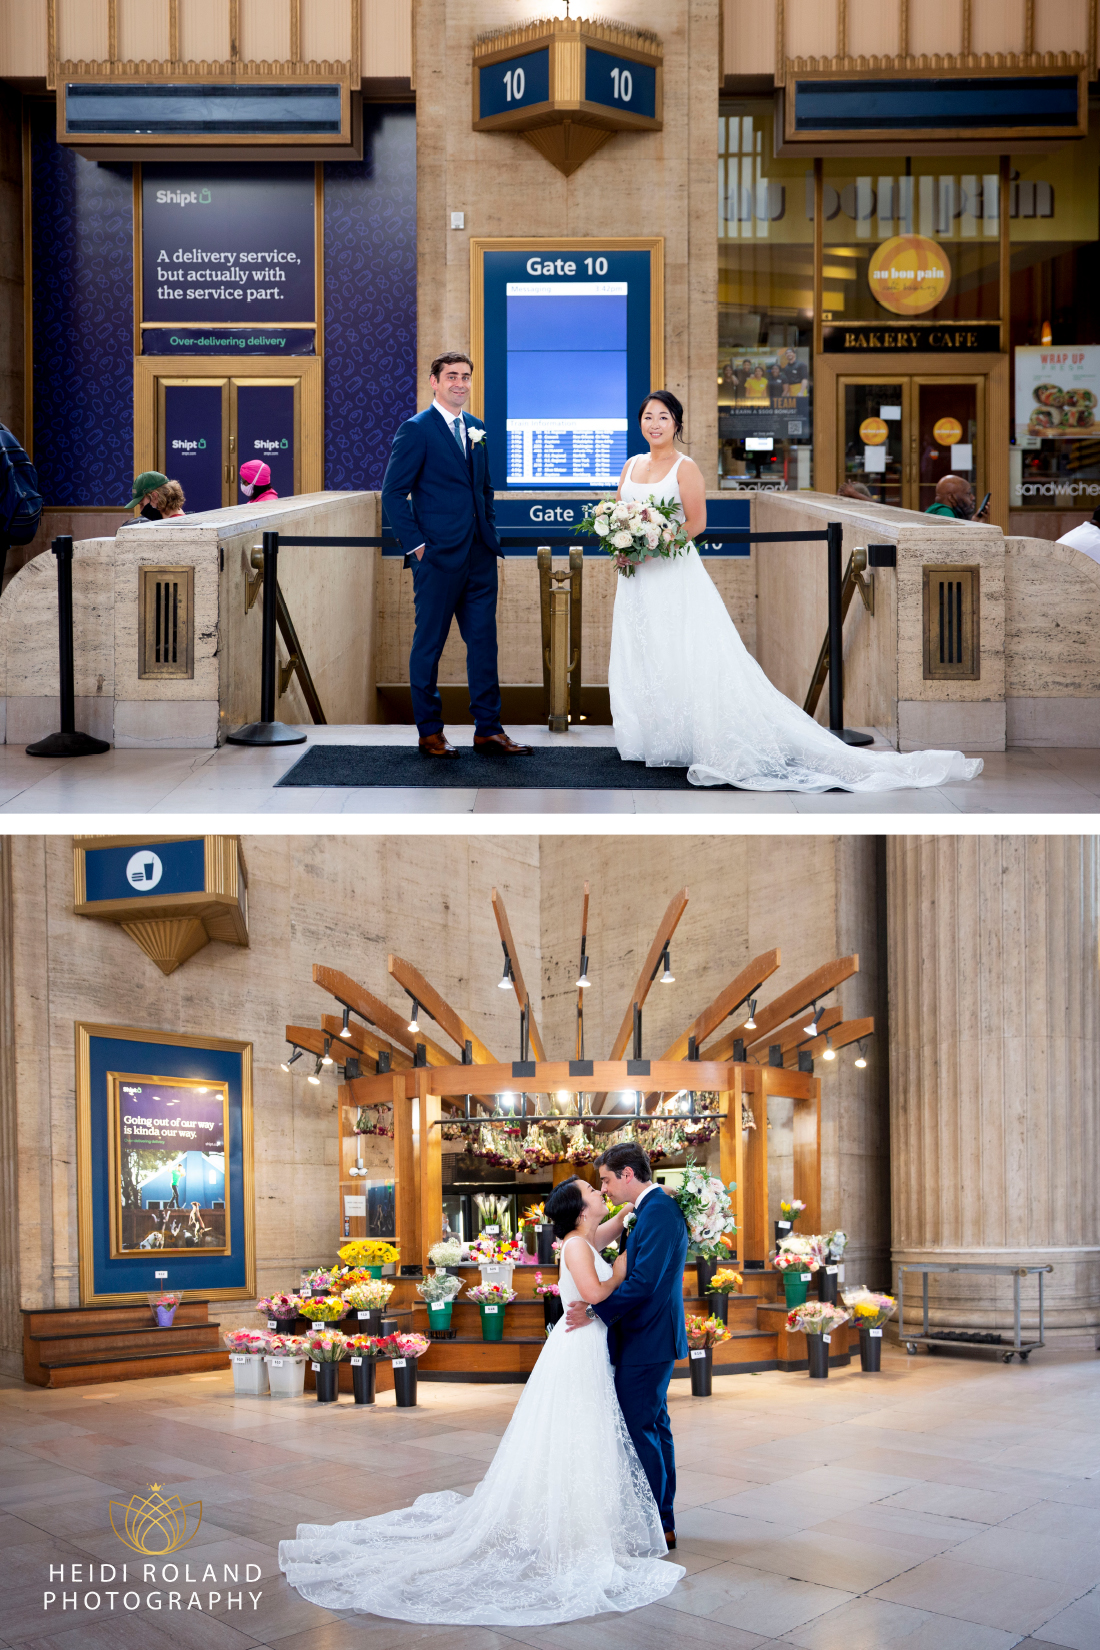 30th street train station Philadelphia wedding photos at flower stand